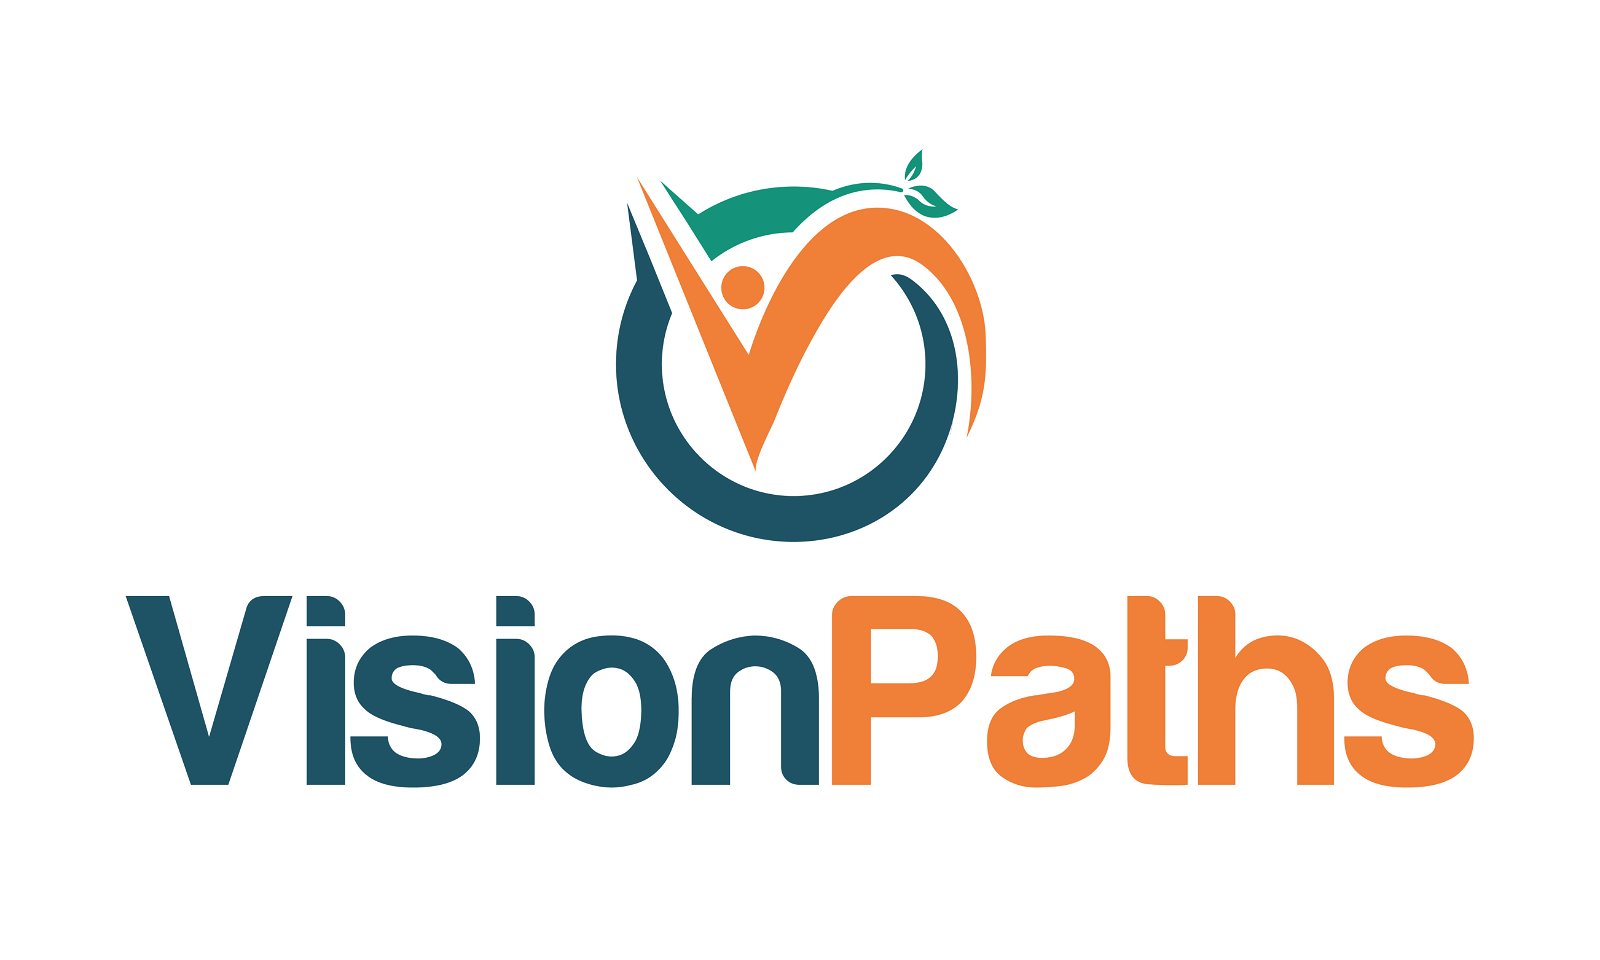 VisionPaths.com - Creative brandable domain for sale